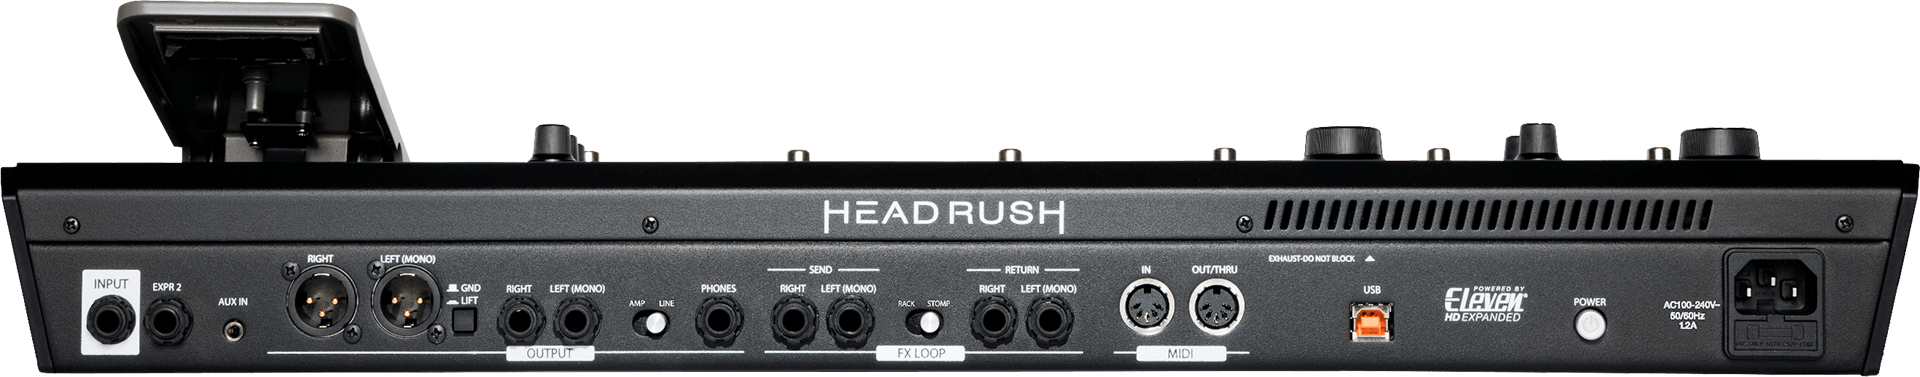 headrush pedalboard